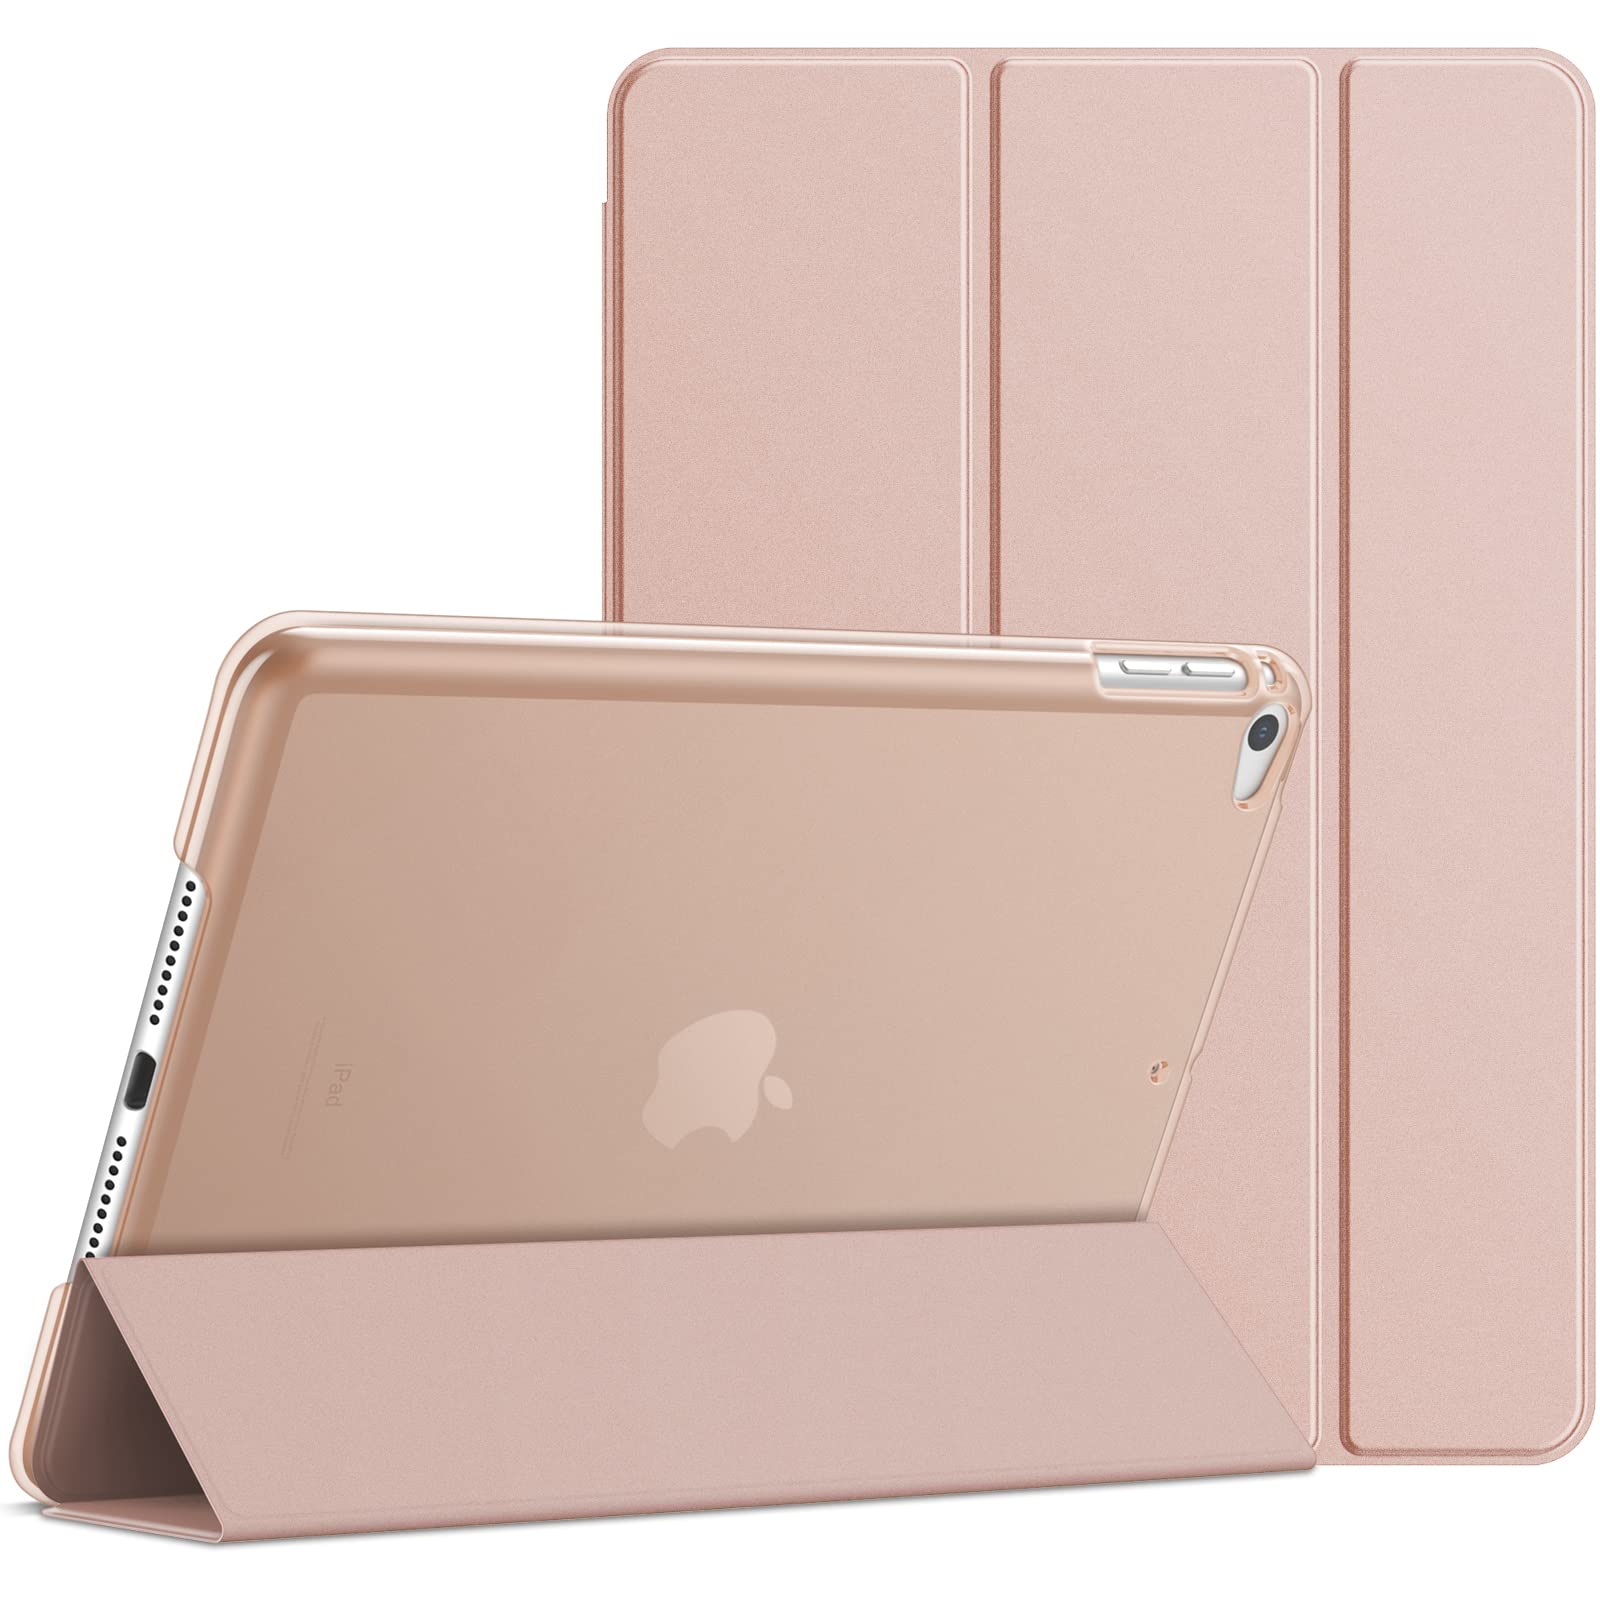 JEDirect iPadmini5 (2019モデルiPad Mini 5) 用 ケース 三つ折スタンド オートスリープ機能 (ローズゴールド)